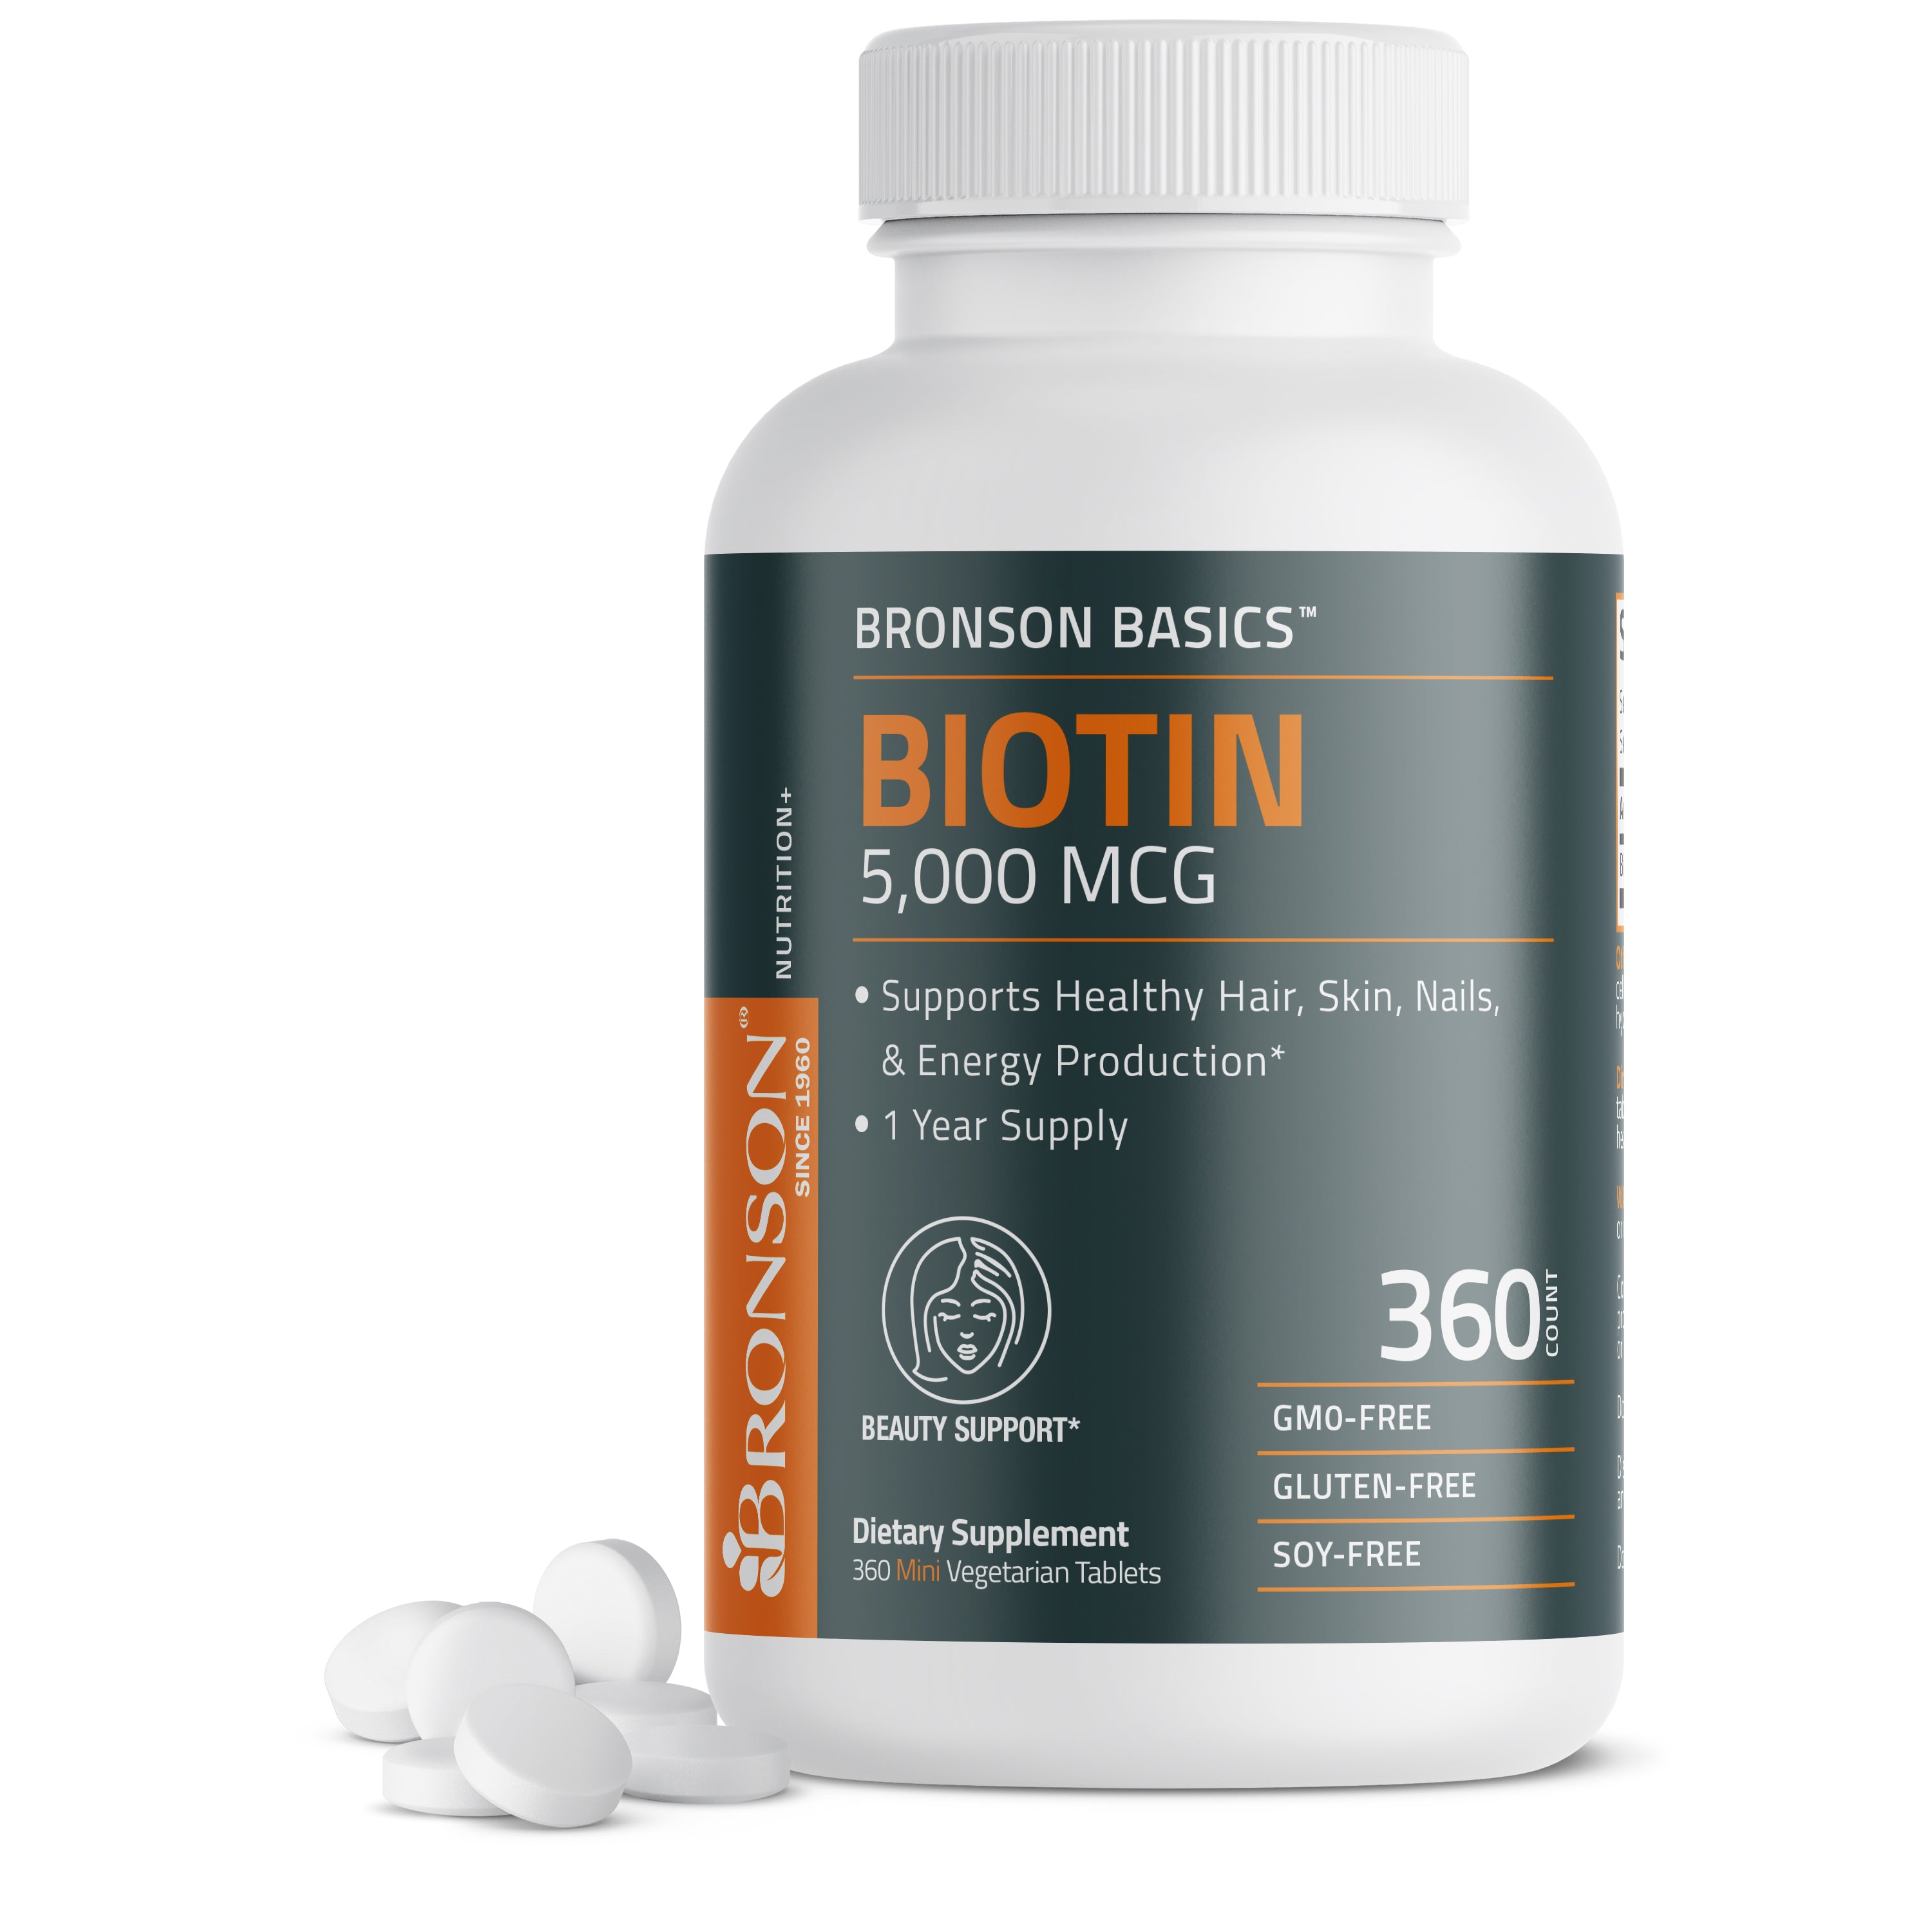 Biotin 5,000 MCG, 360 Tablets view 1 of 6